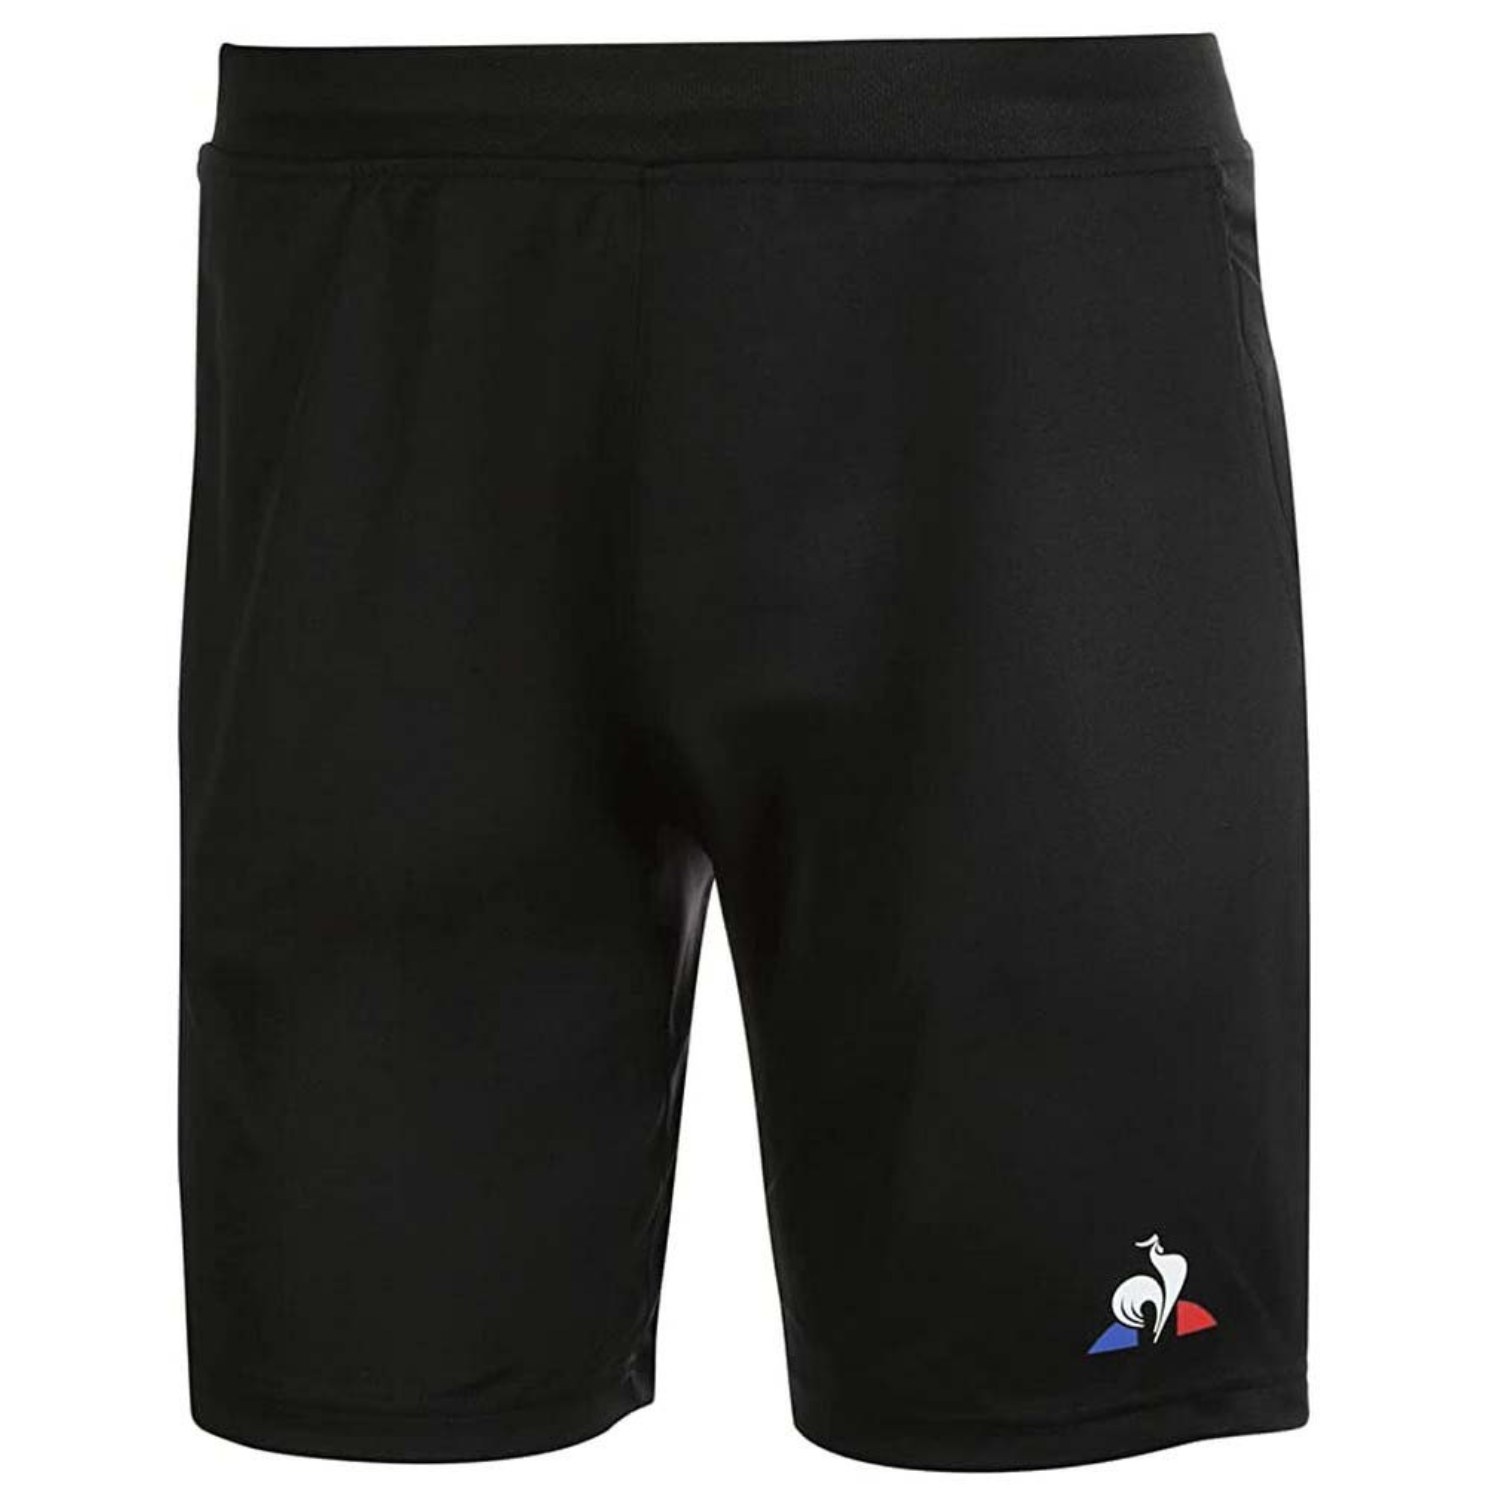 Le Coq Sportif Tennis Short Black